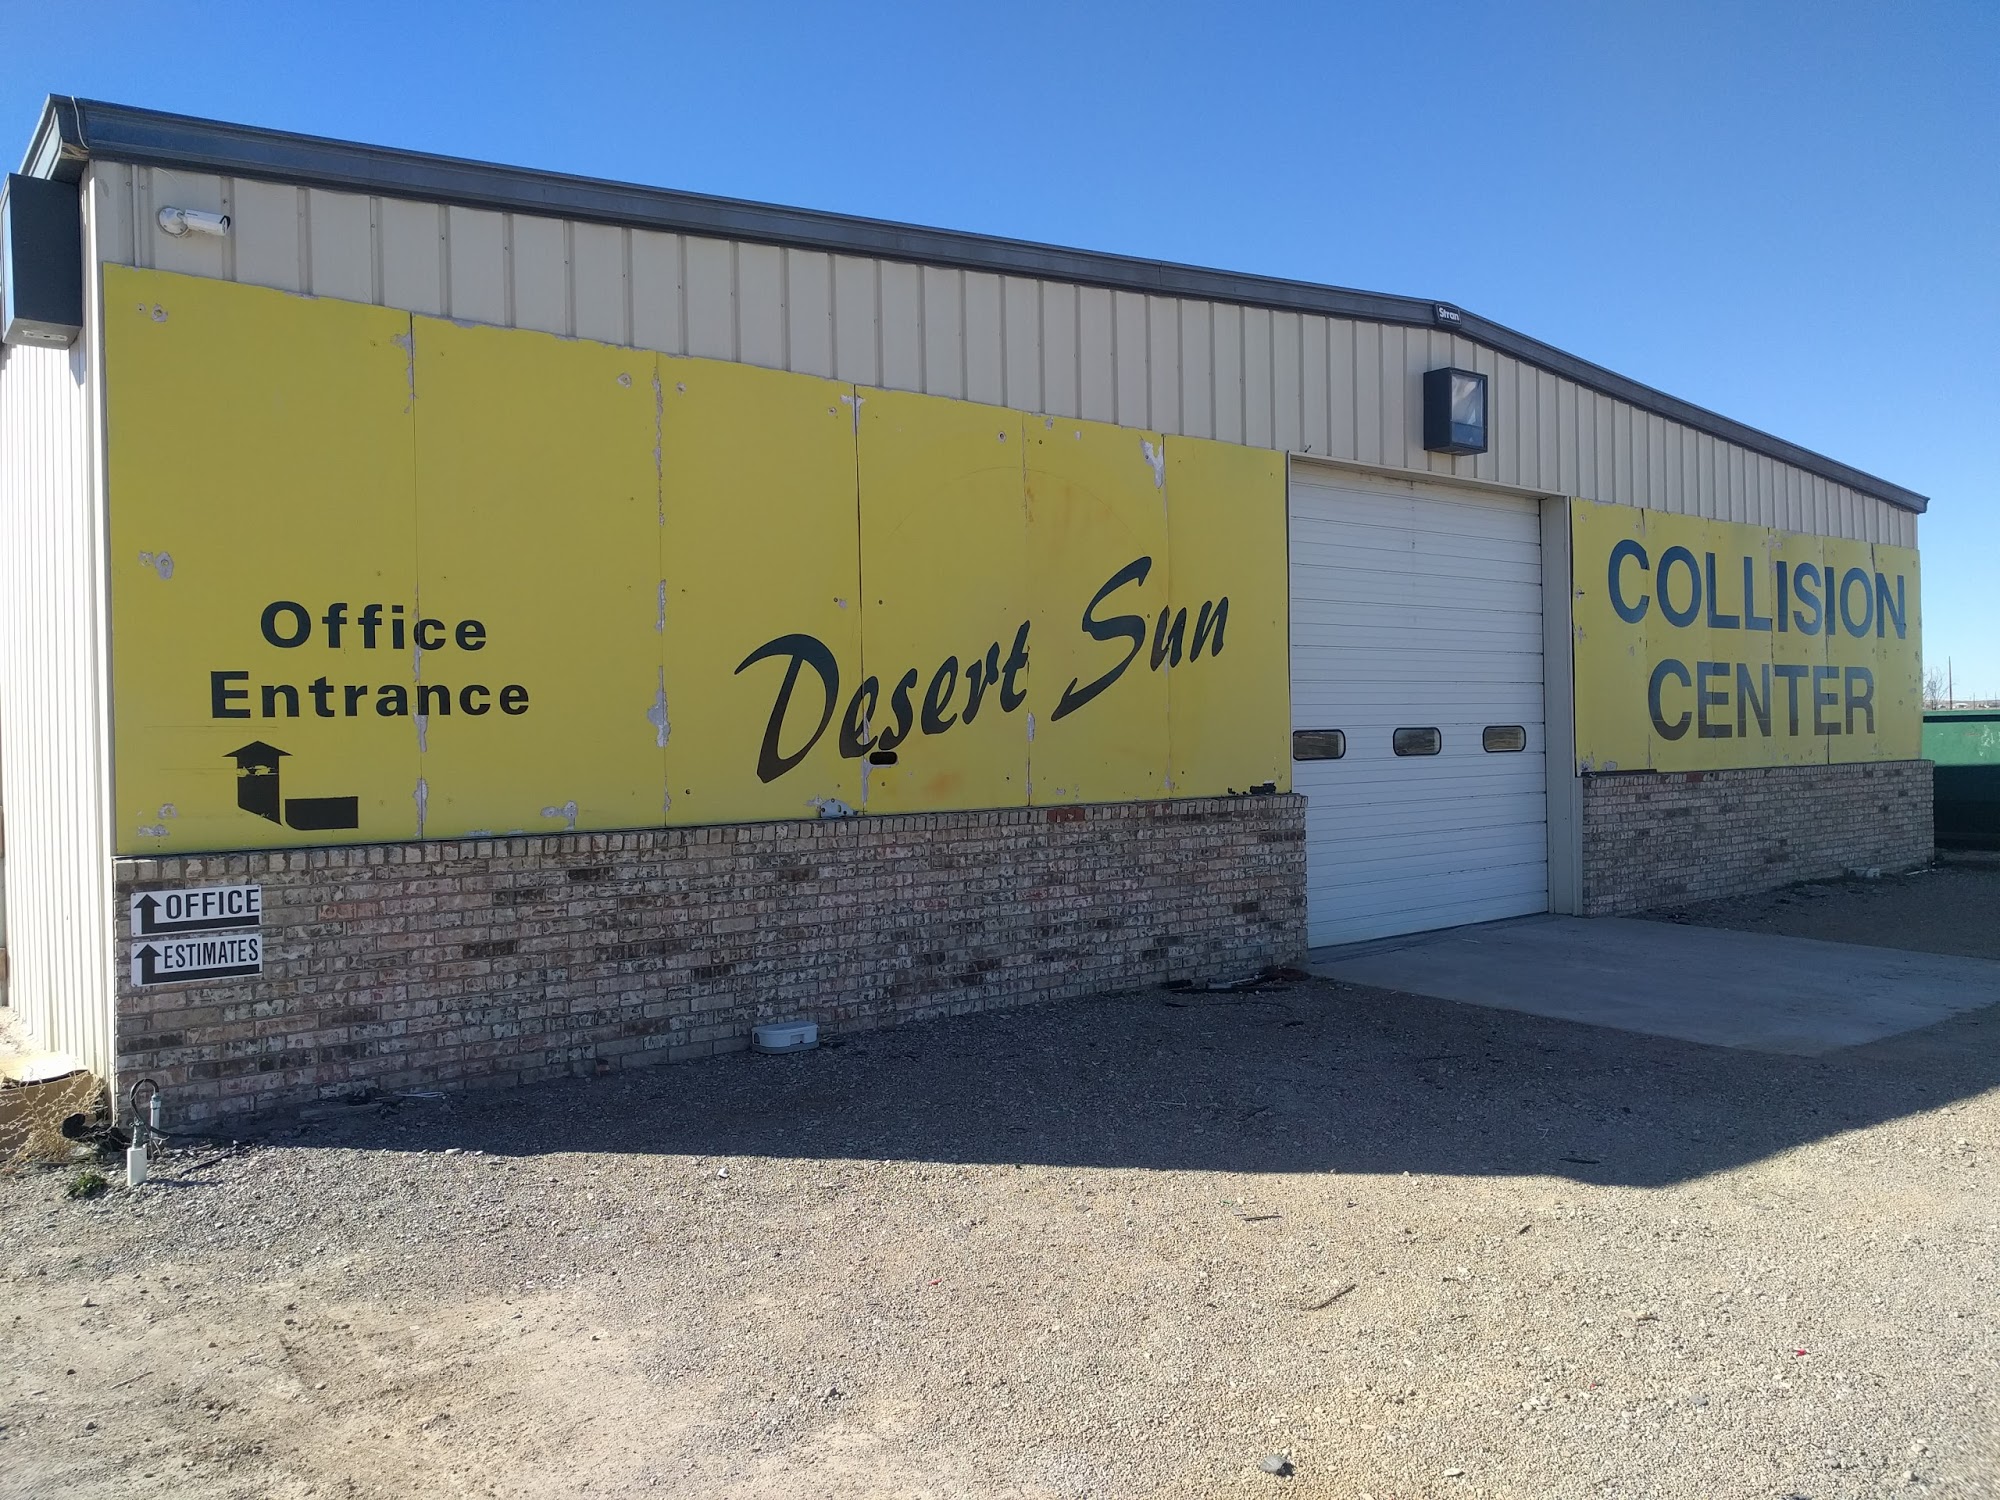 Desert Sun Collision Center